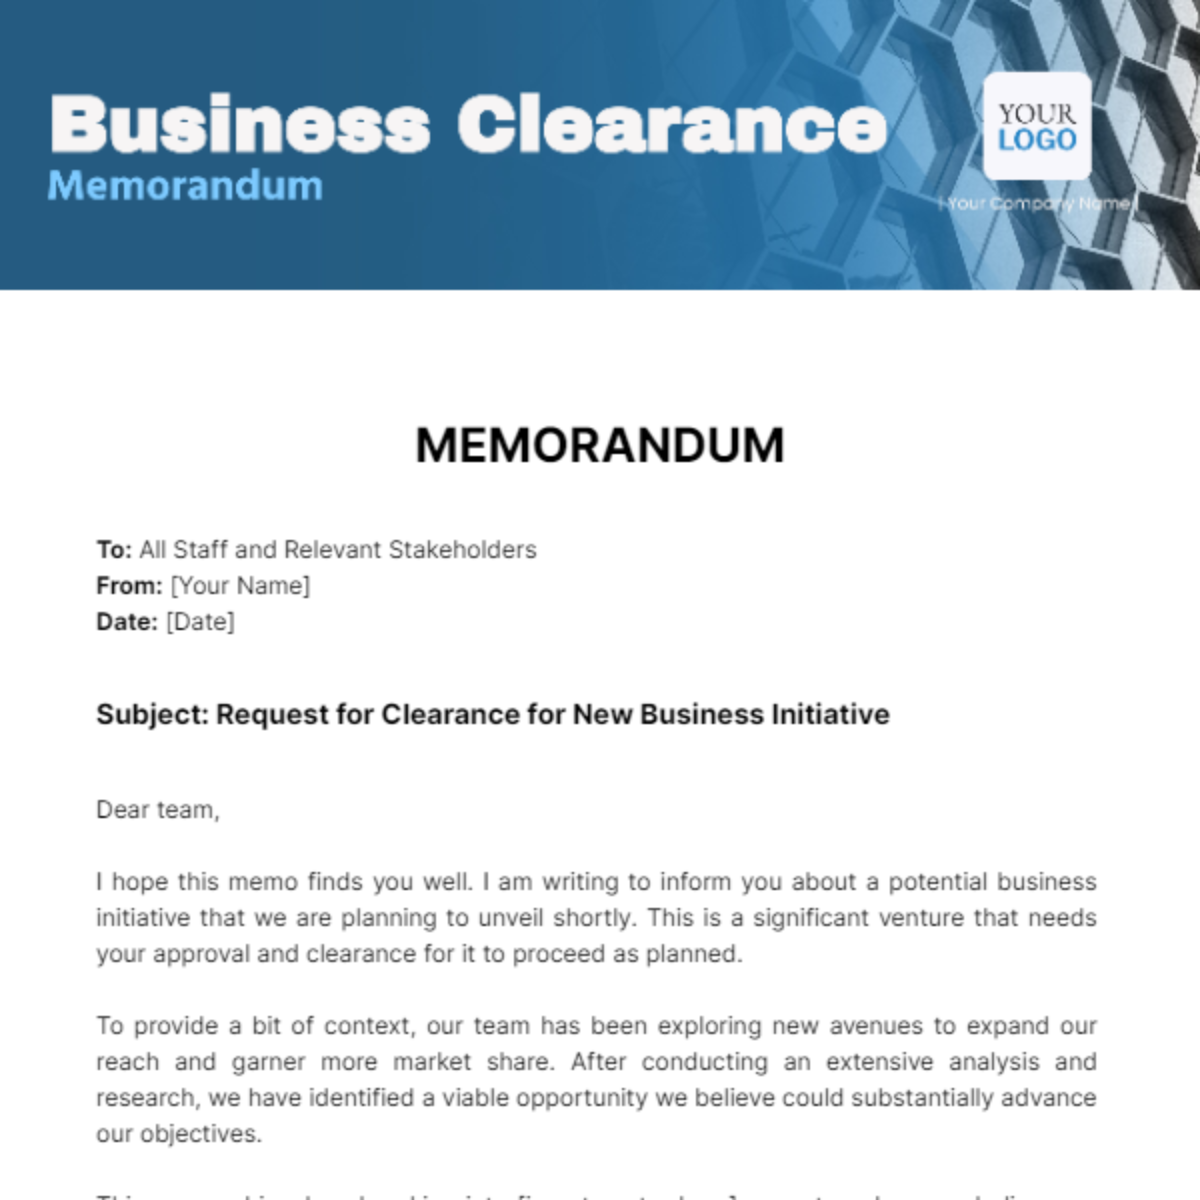 Free Business Clearance Memorandum